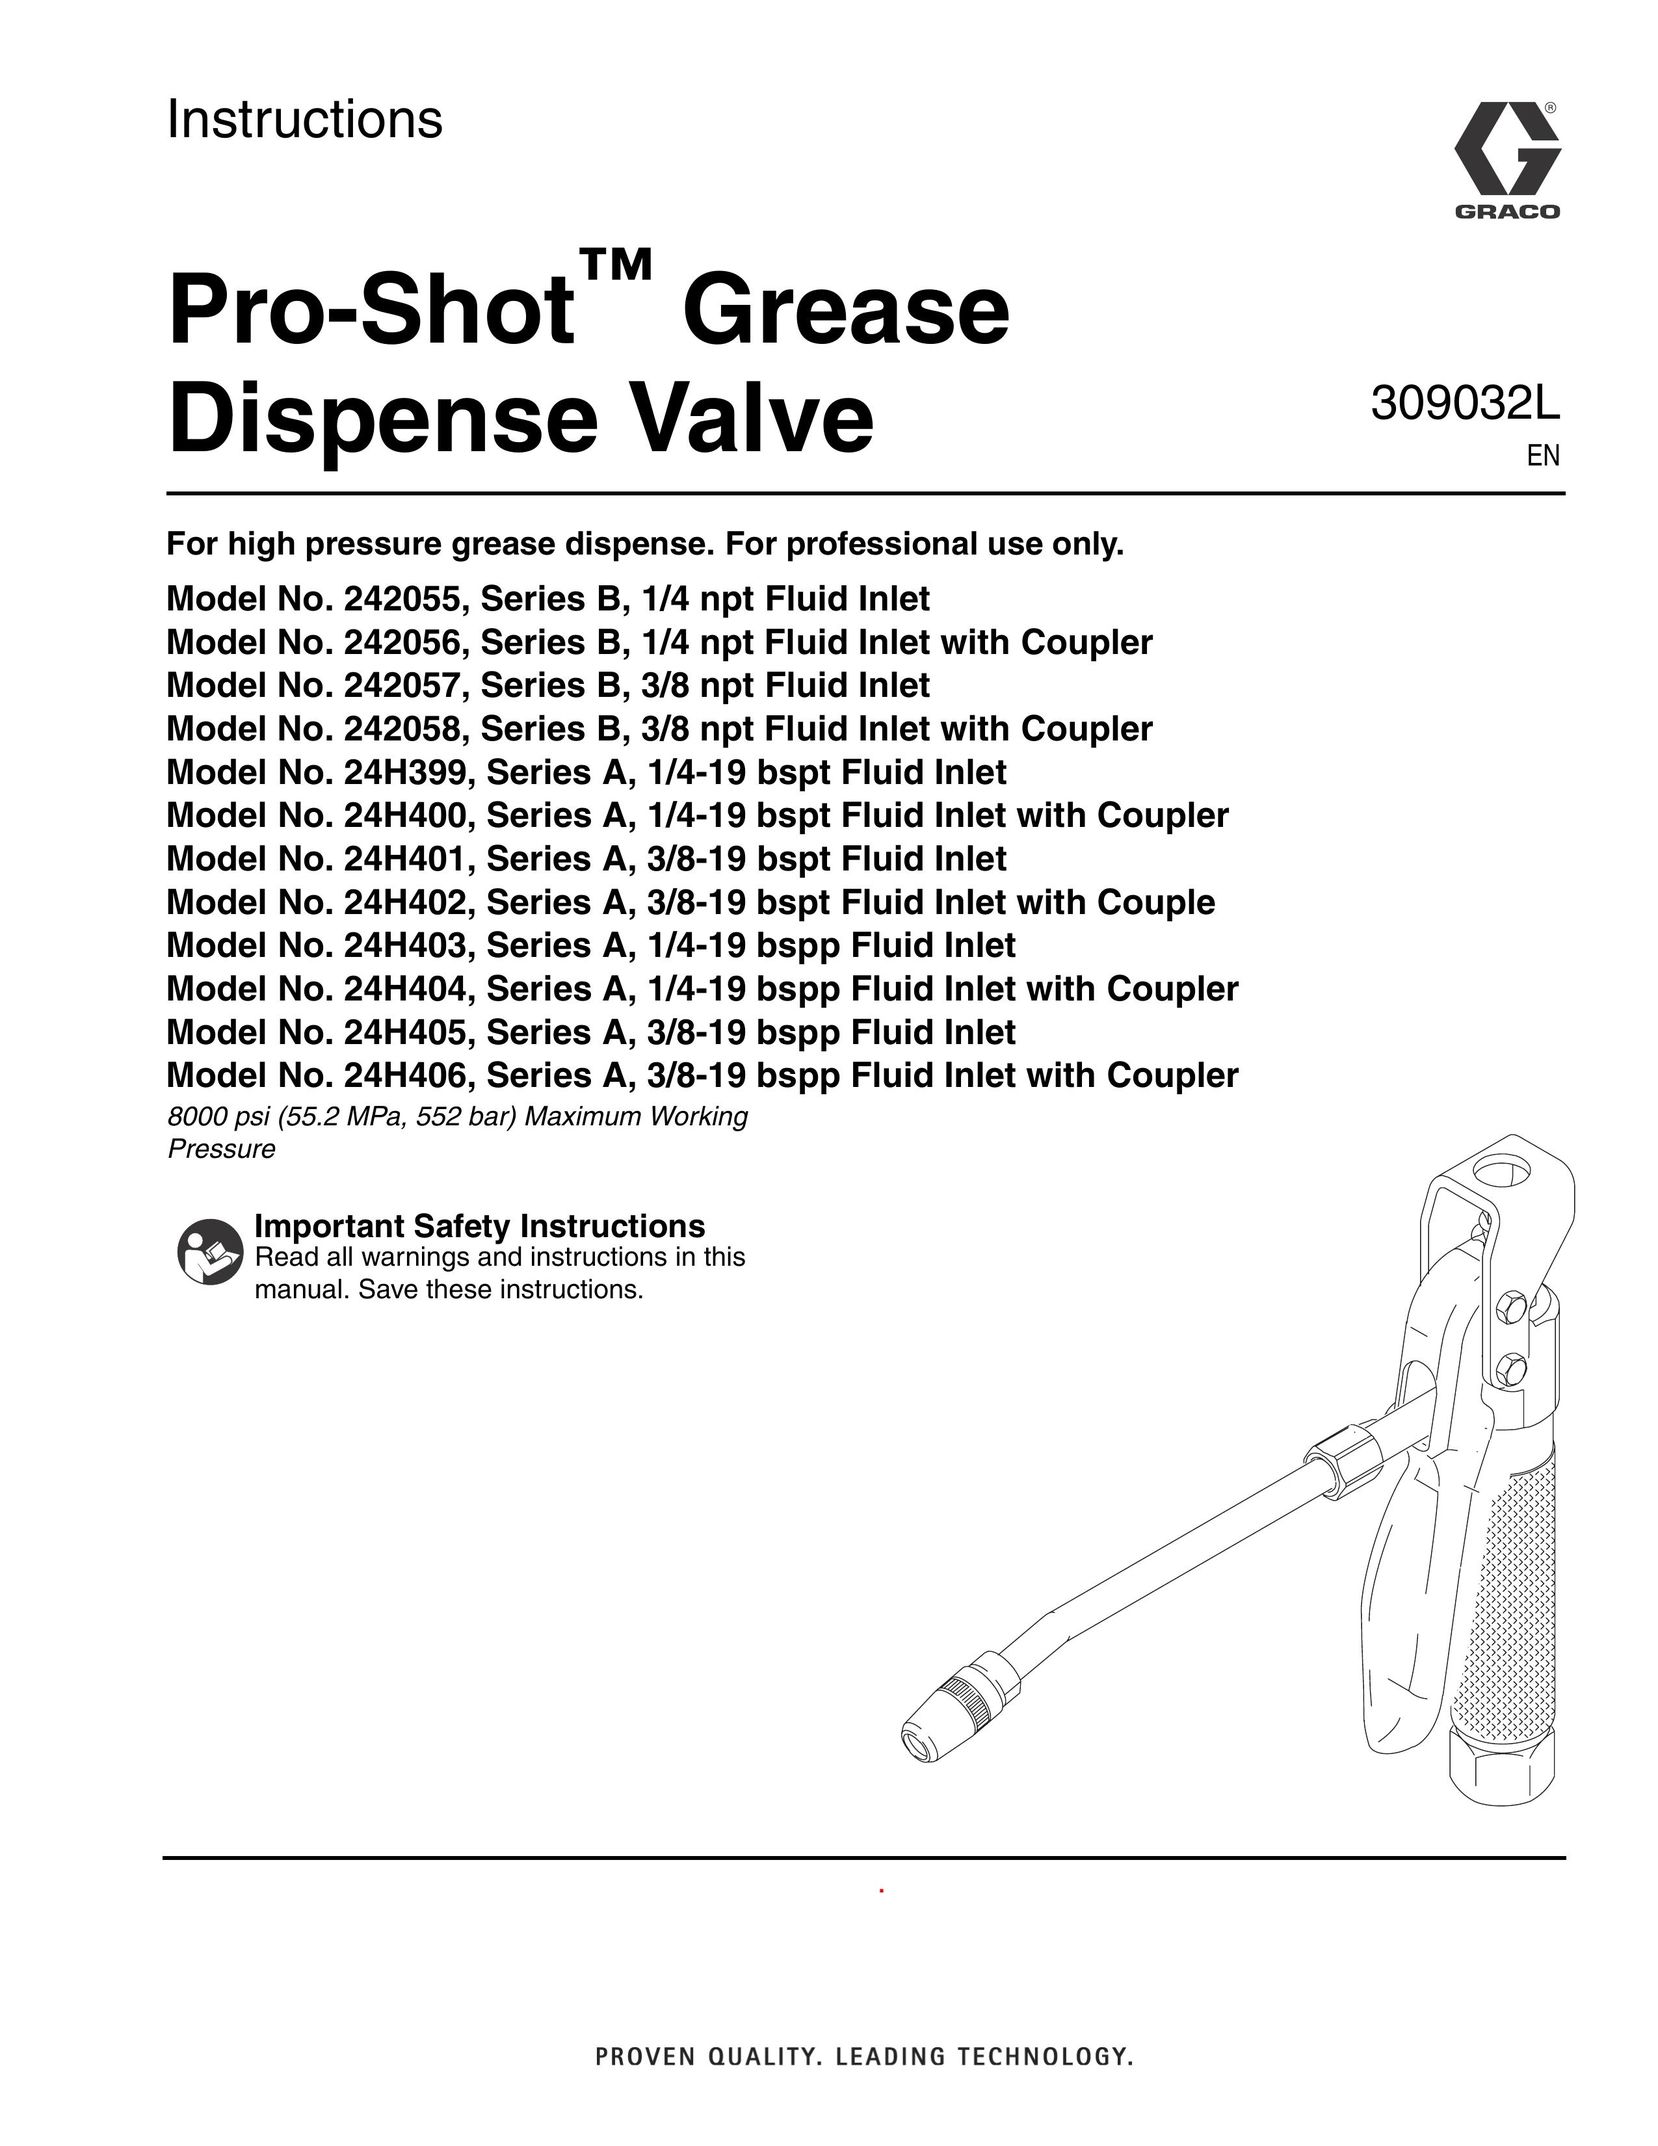 Graco 242005 Glue Gun User Manual